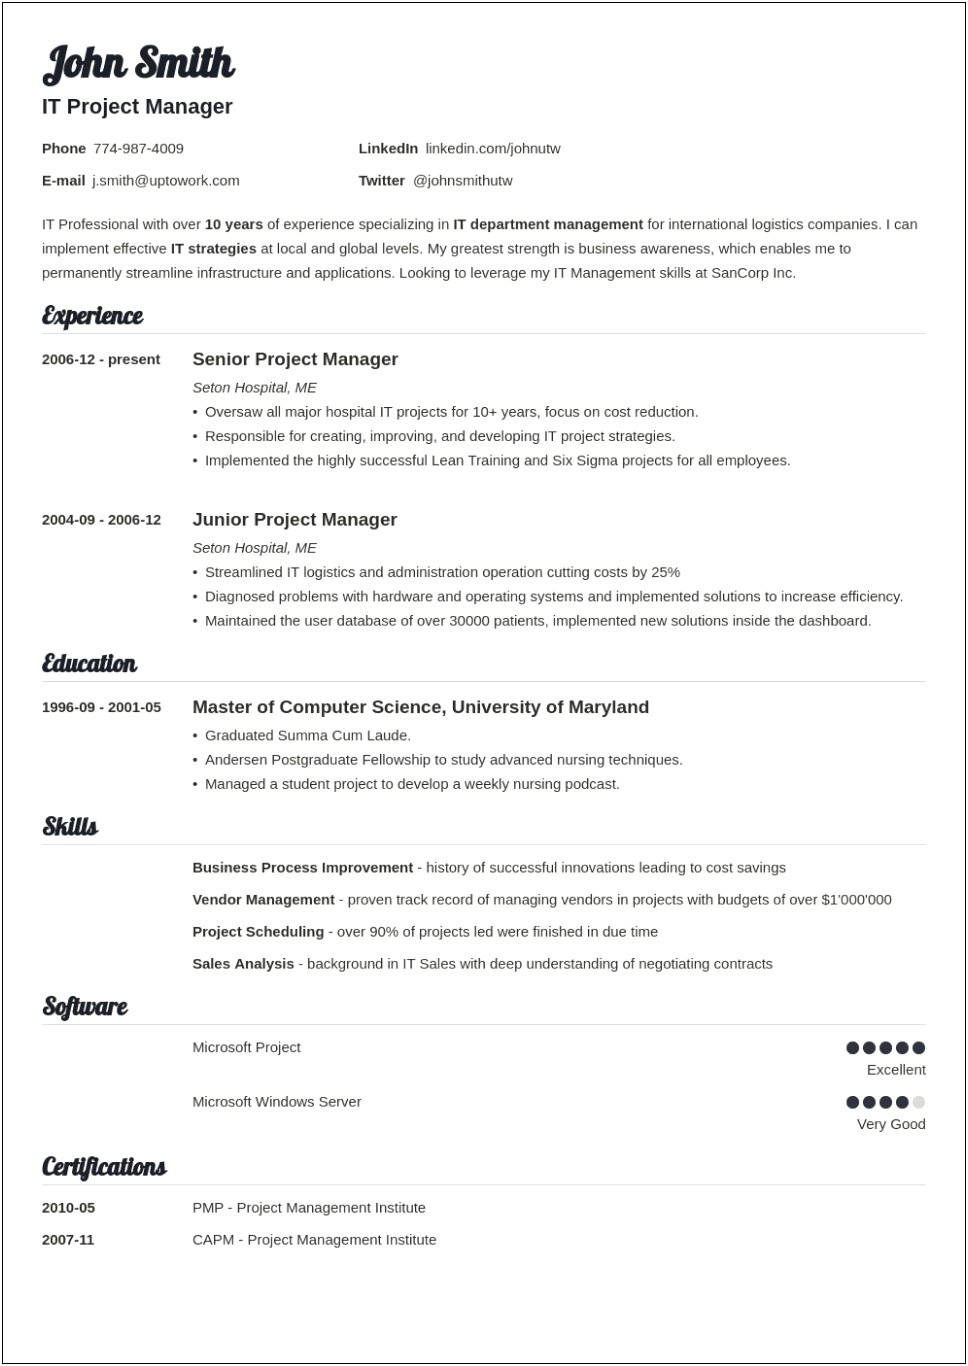 Resume Templates With Job Descriptions